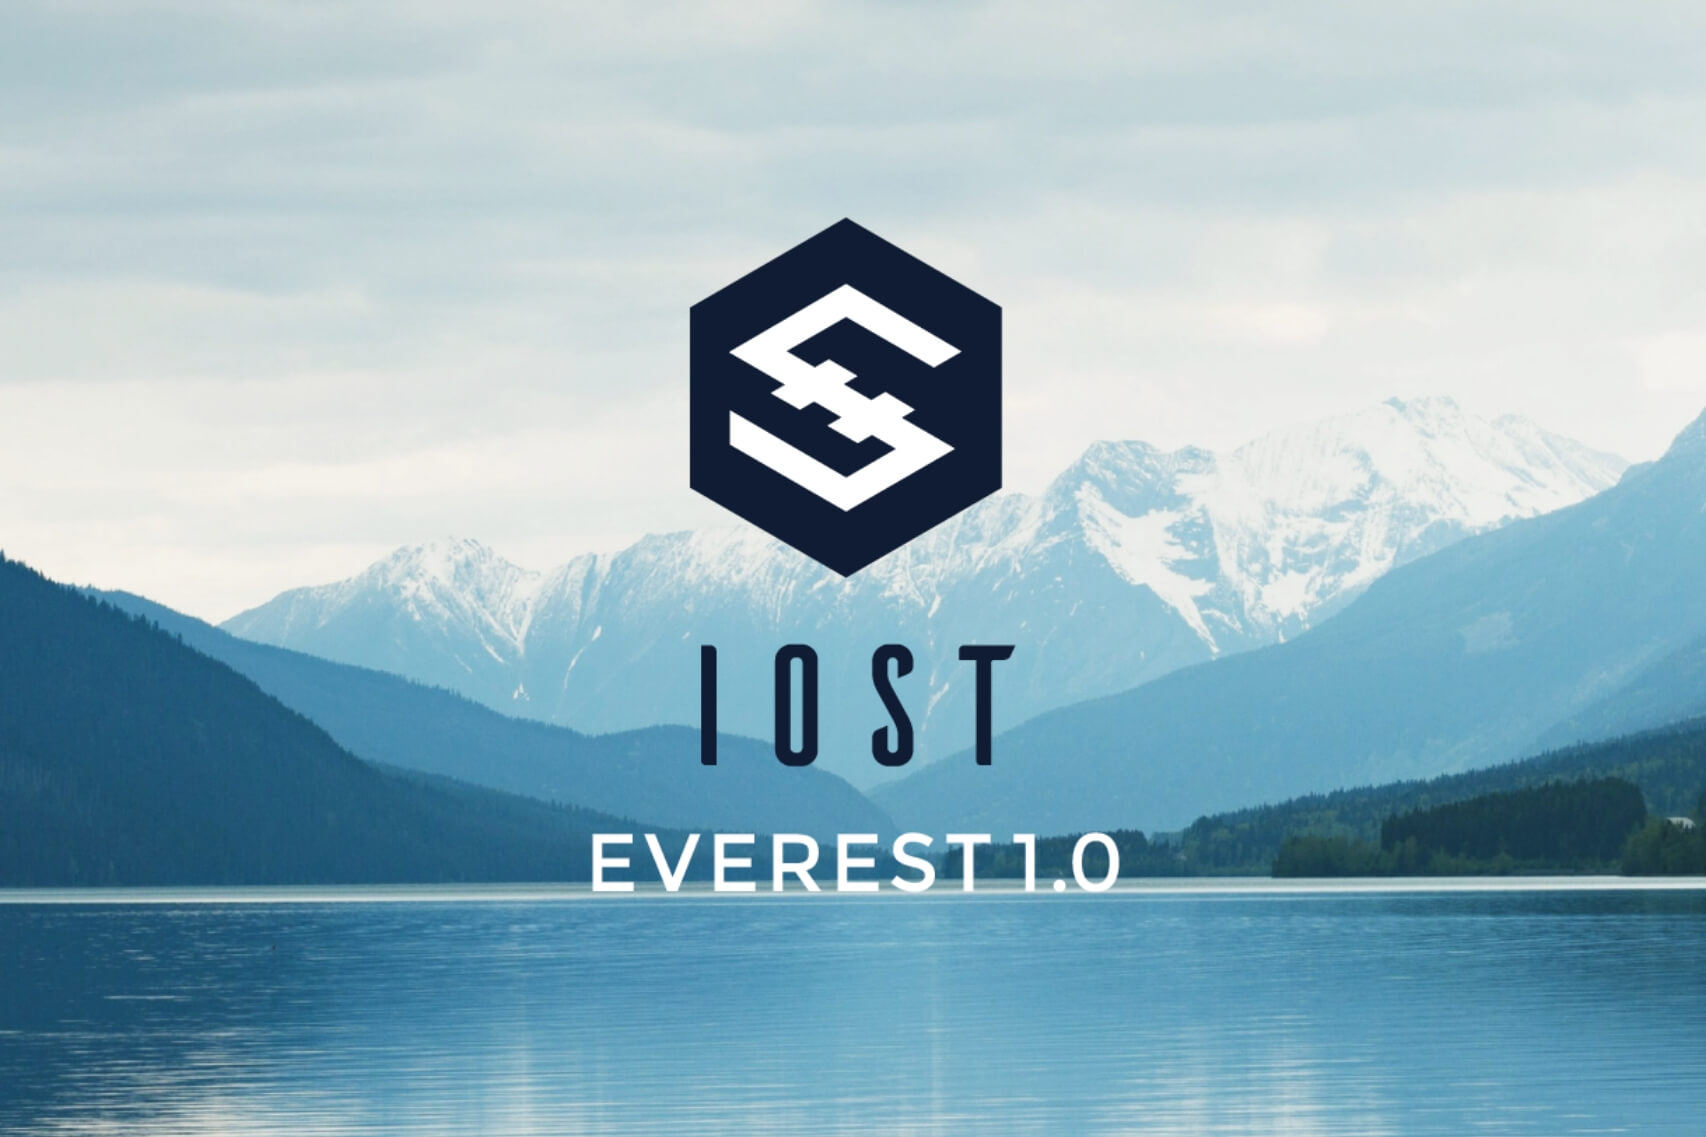 iost_everest